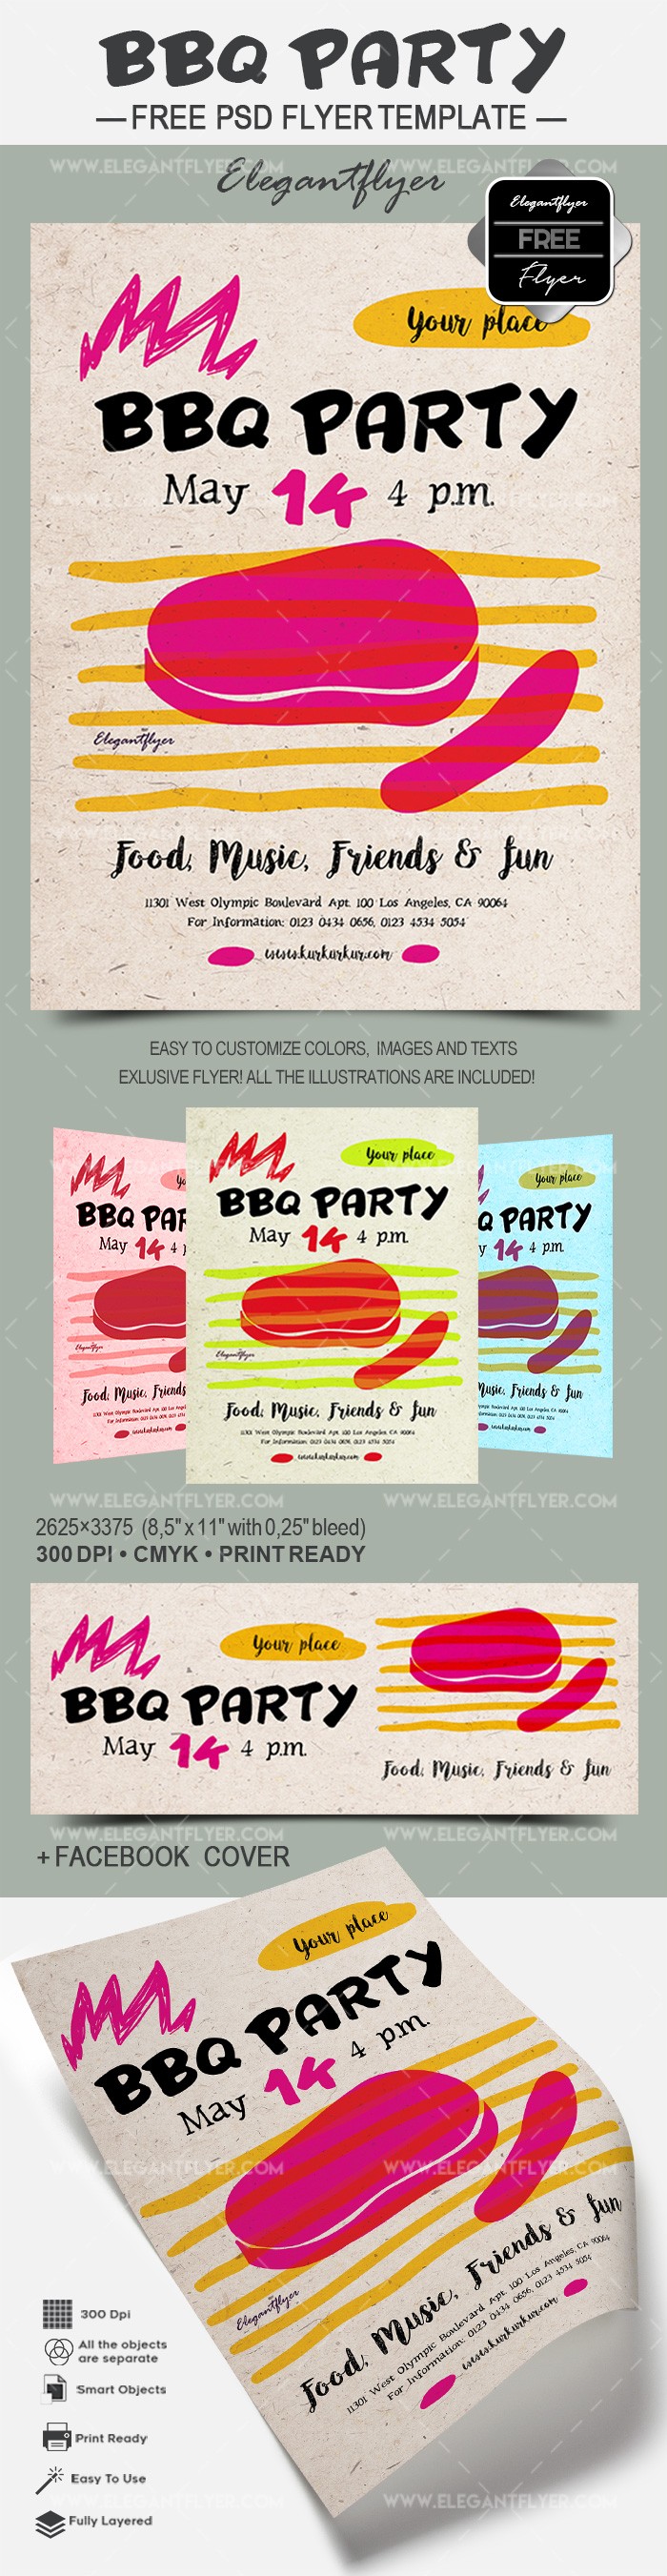 BBQ Party by ElegantFlyer